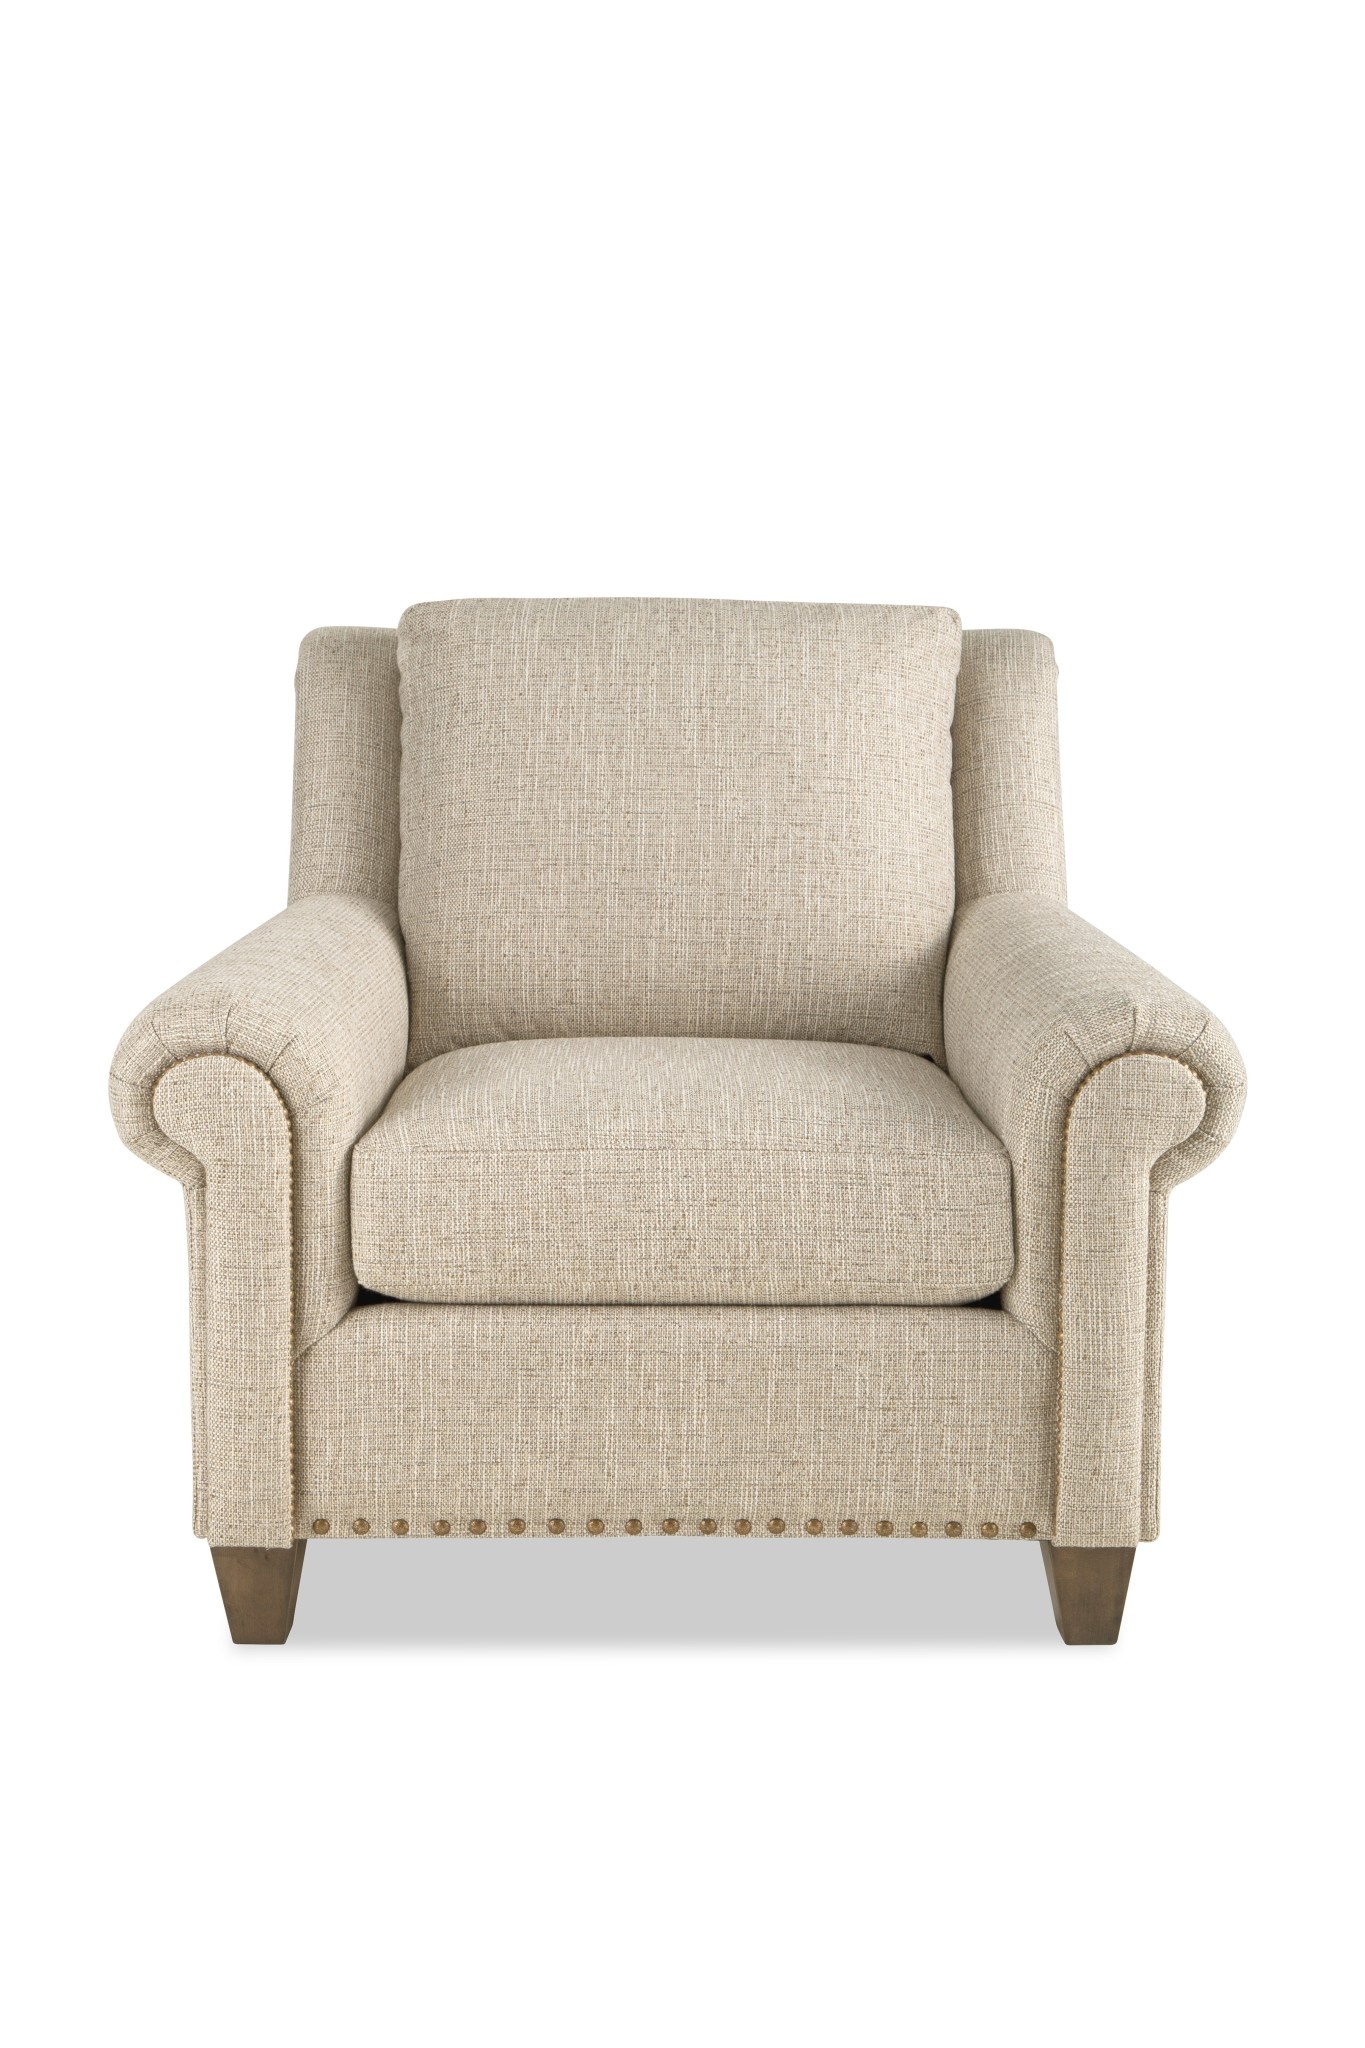 Craftmaster Furniture 730910 Chair